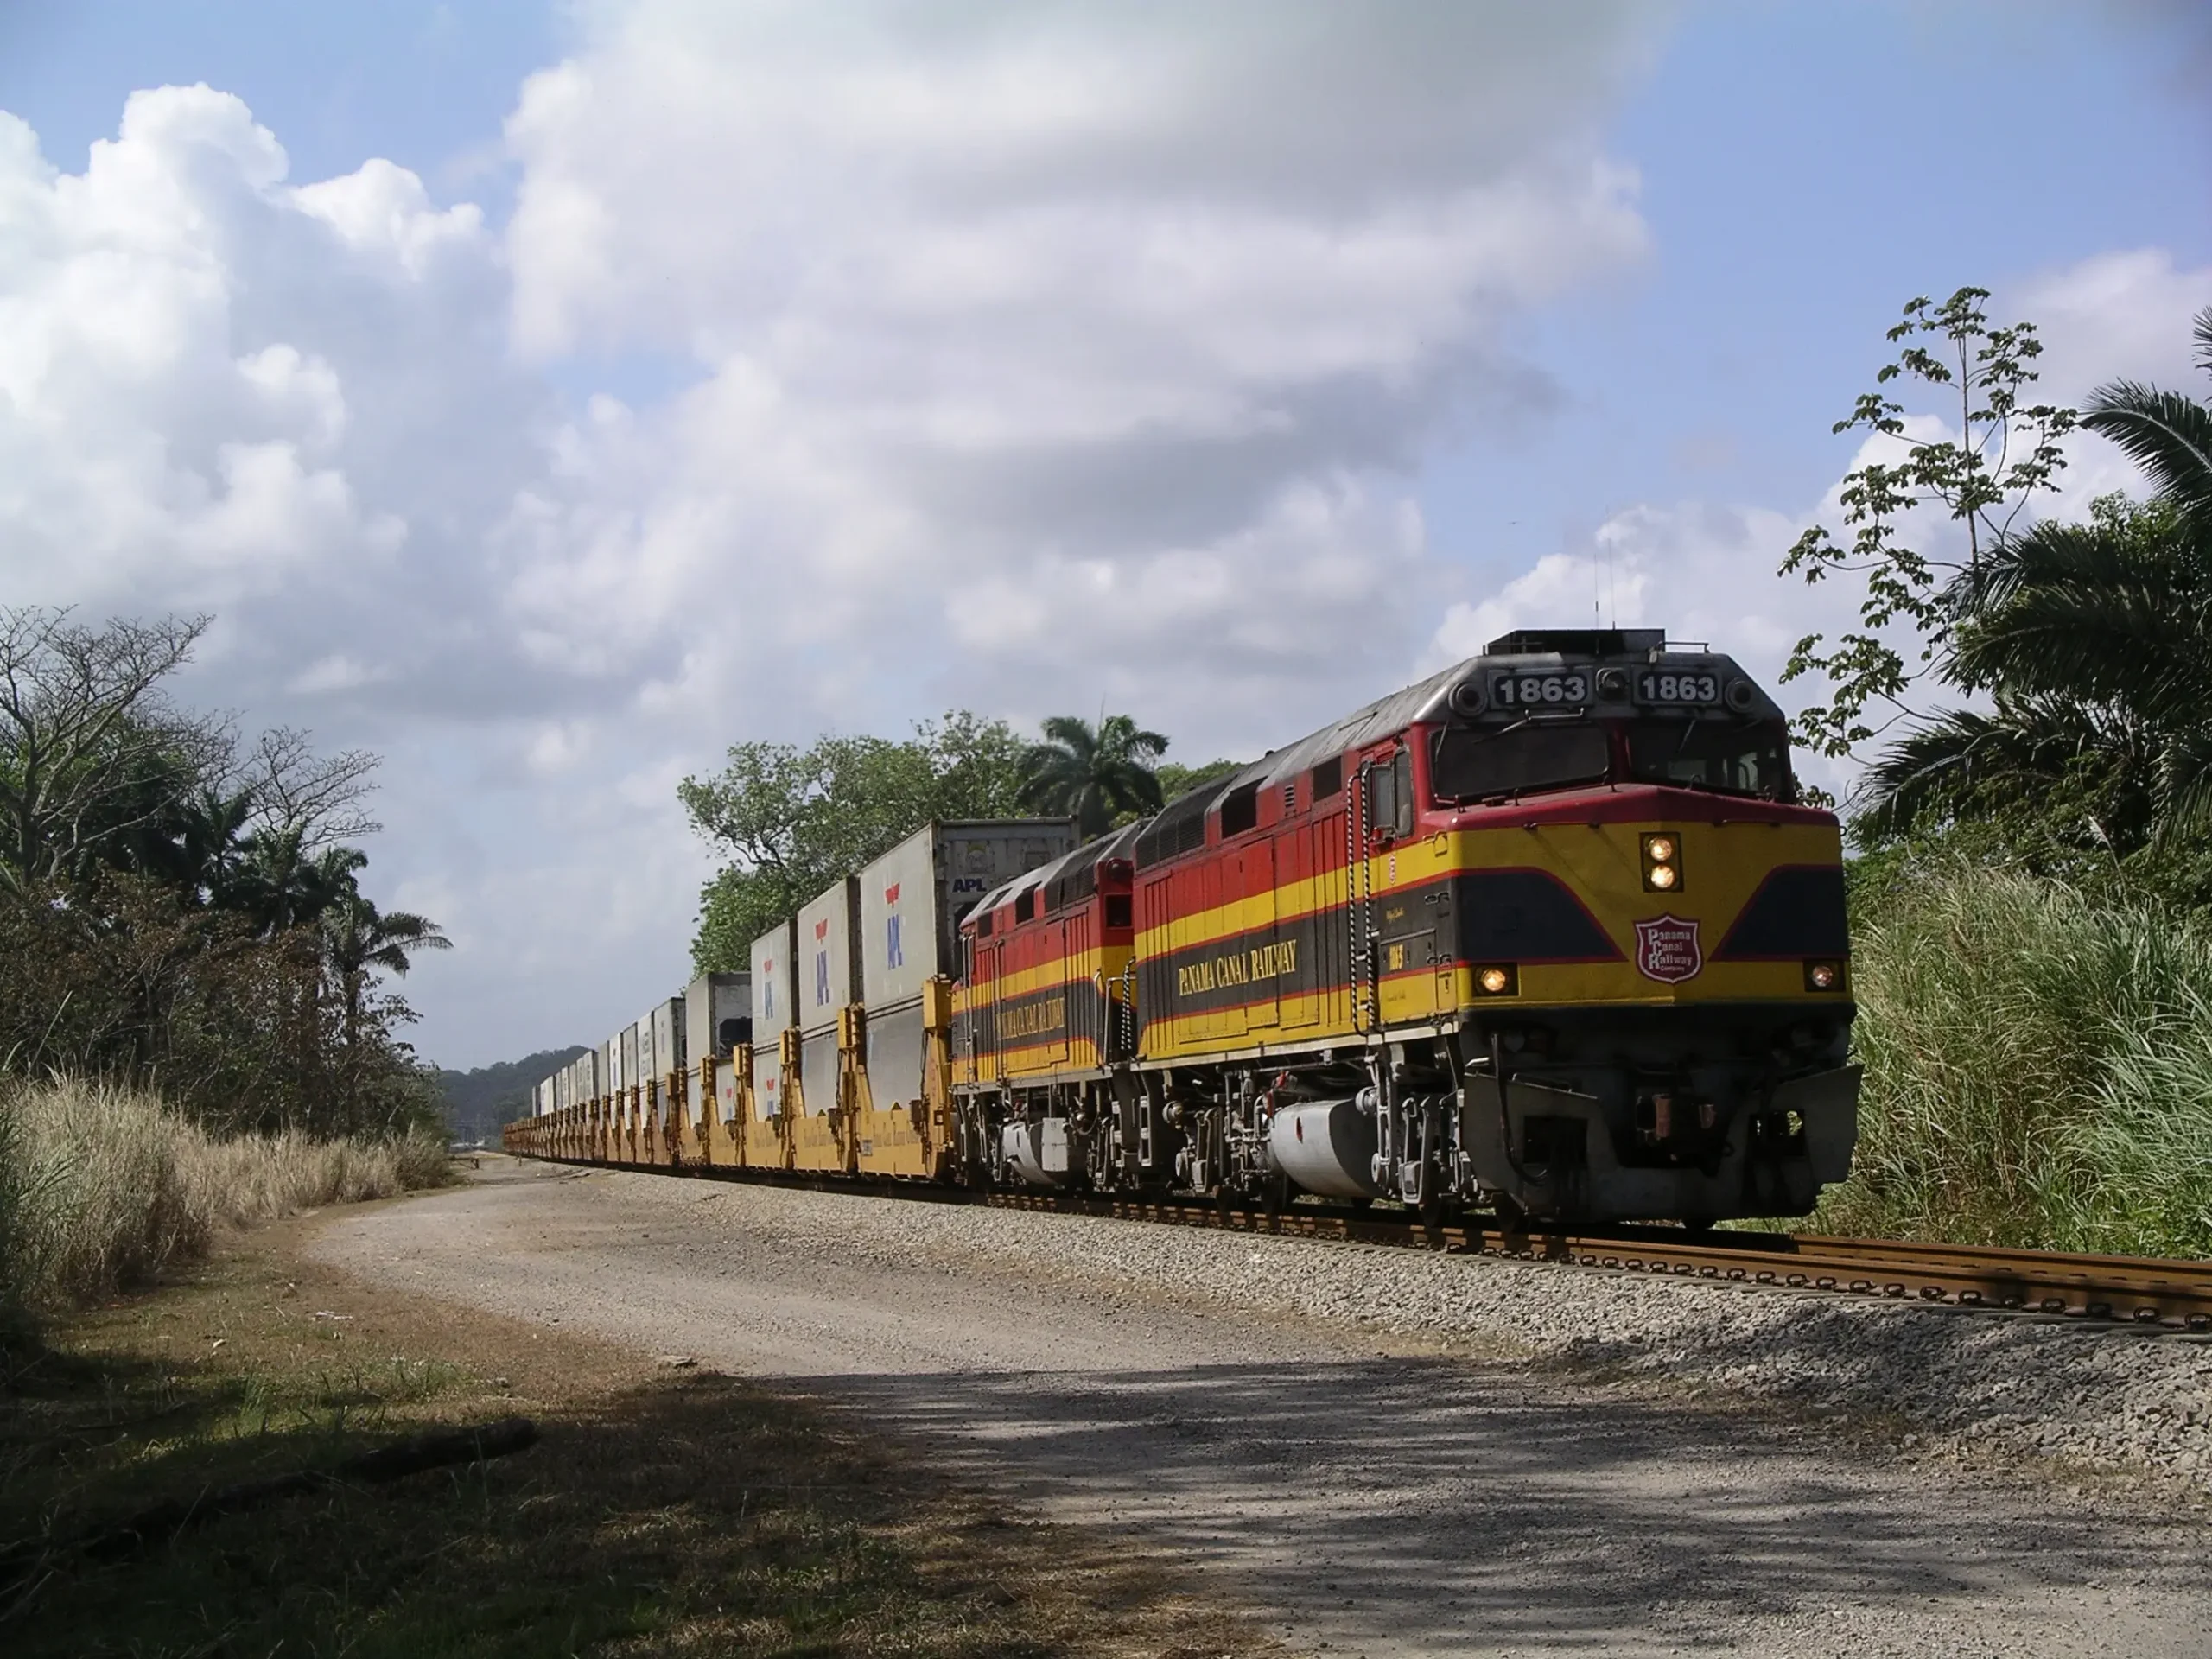 caracteristicas del ferrocarril de panama - Quién permitió la construcción del Ferrocarril de Panamá